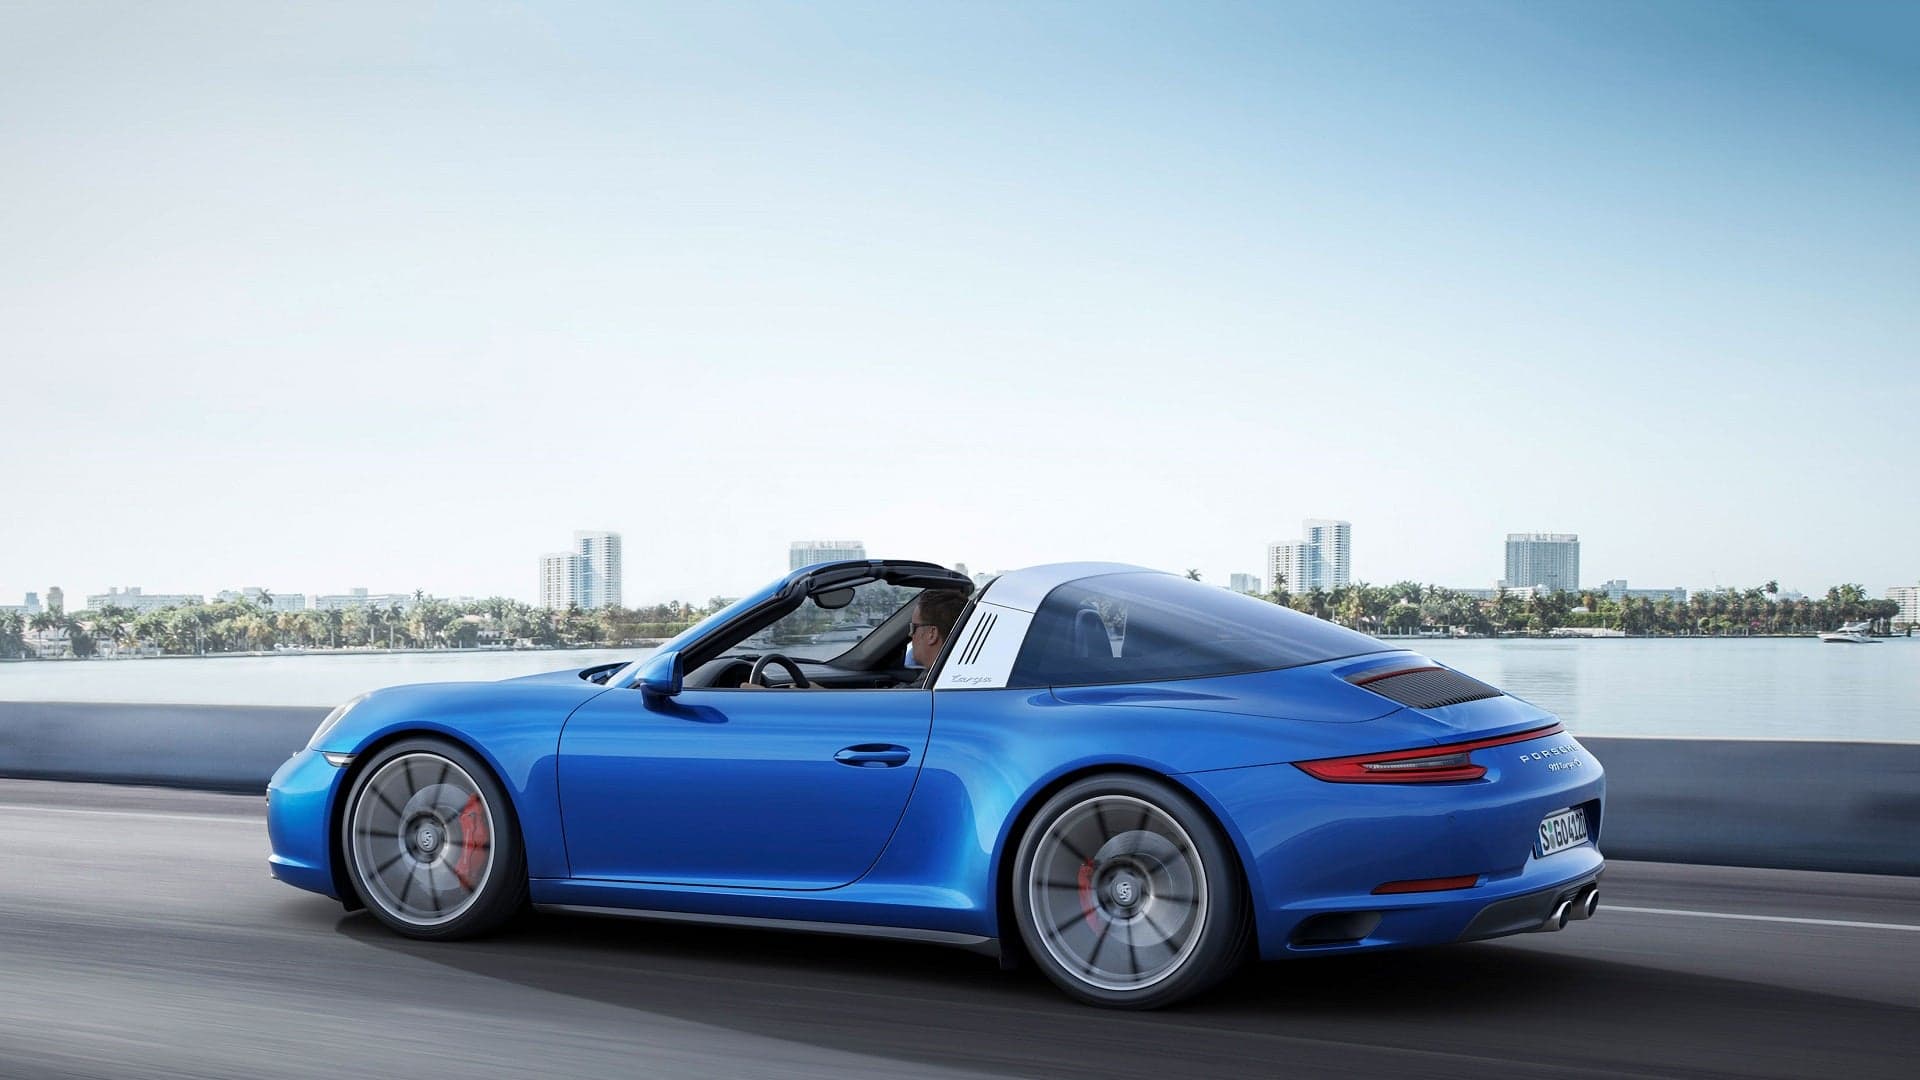 Porsche Partners With Turo, Announces VIP Rental Programs